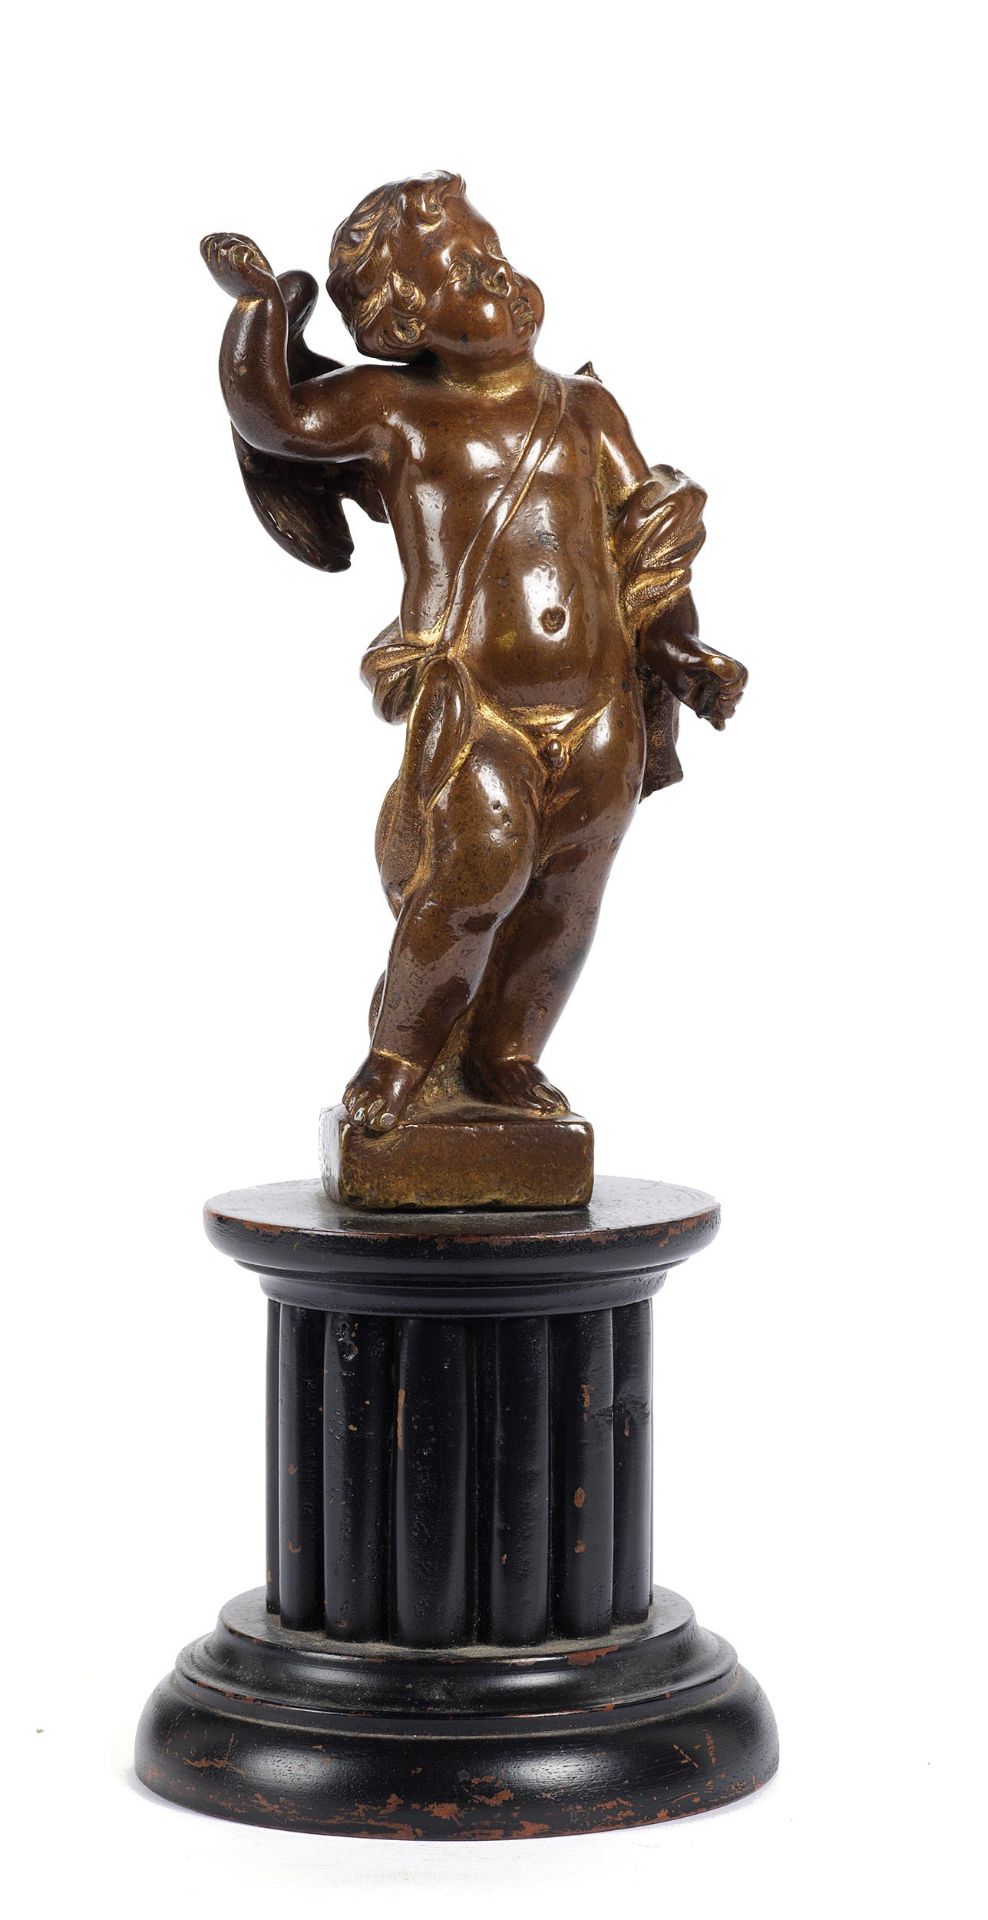 Amor-Statuette des 17. Jahrhunderts